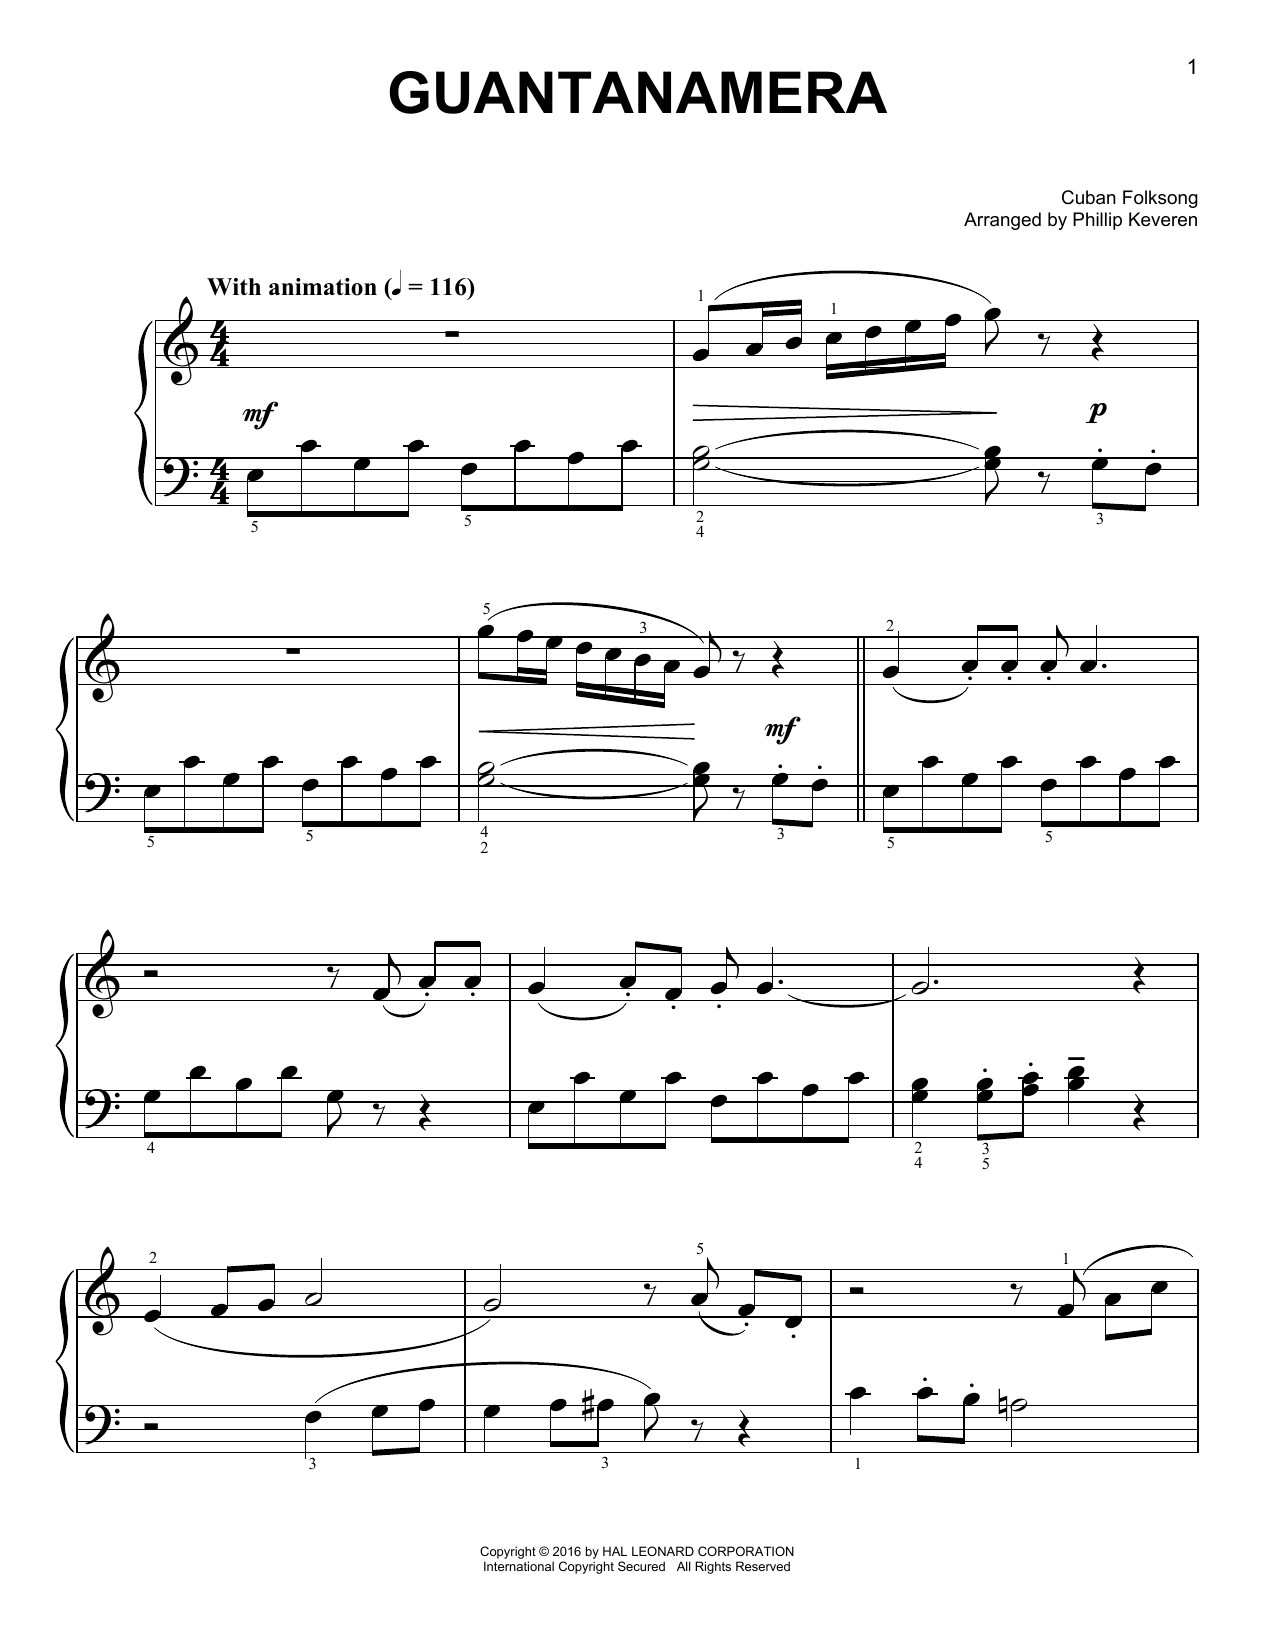 Cuban Folksong Guantanamera Sheet Music Notes & Chords for Easy Piano - Download or Print PDF